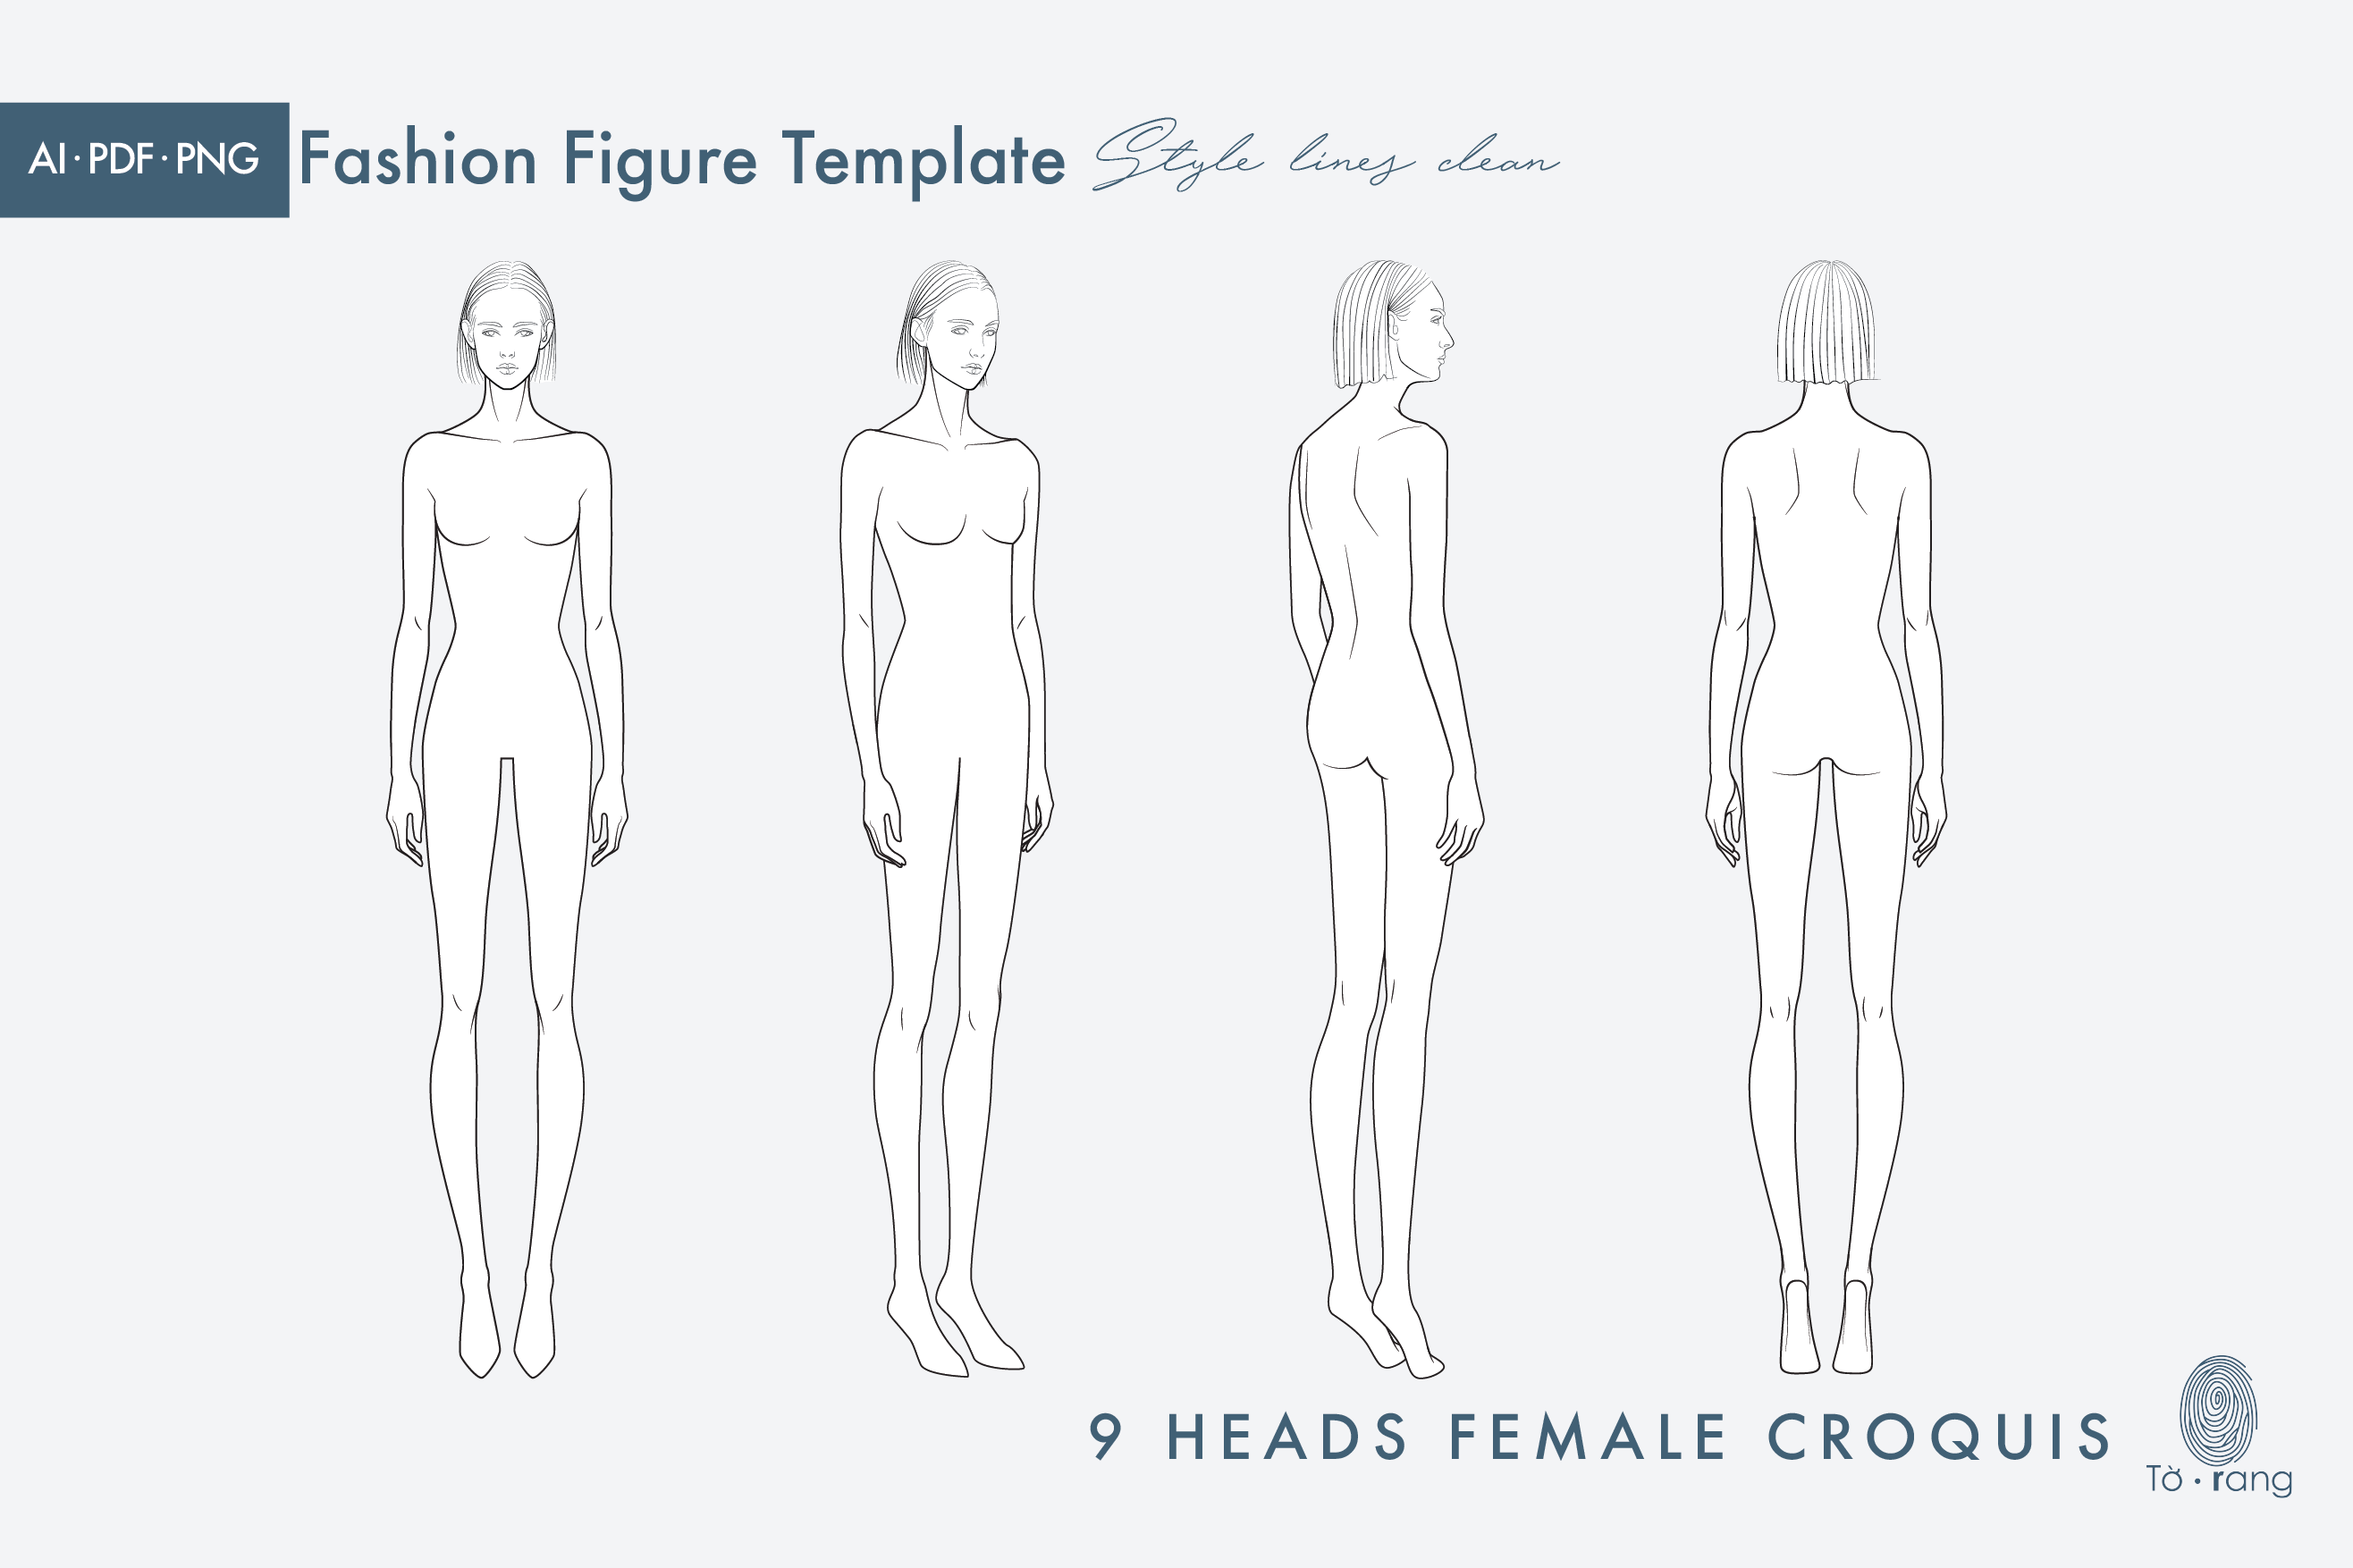 Fashion Illustration Sketch Template Fashion Design Drawing Drafting Tool   eBay